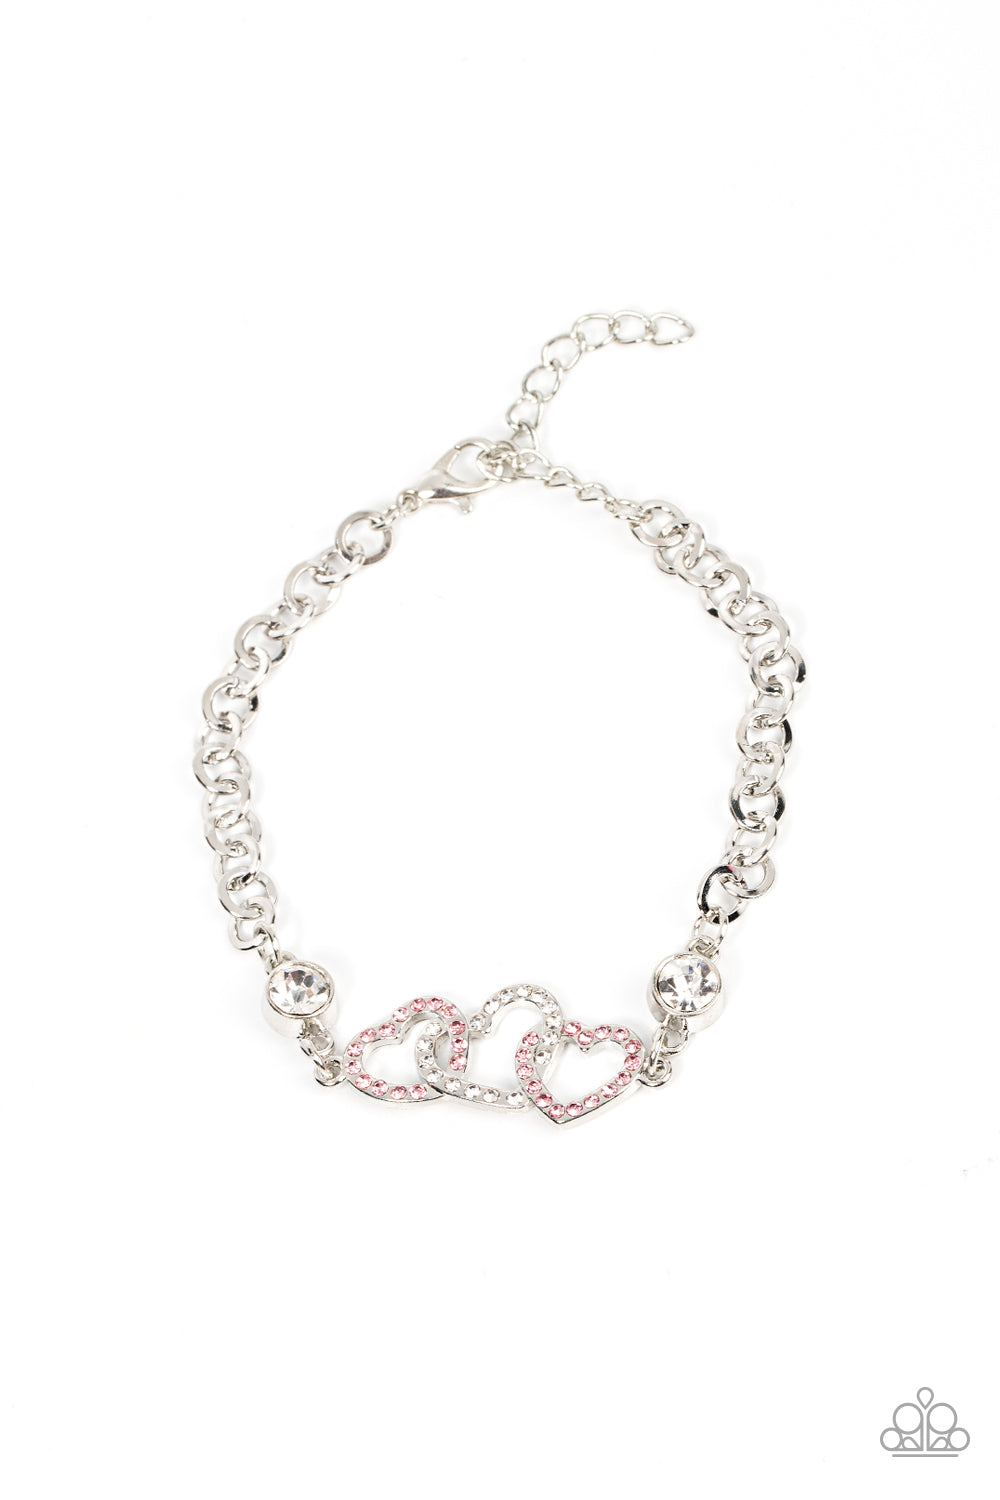 Desirable Dazzle - Pink and White Heart Rhinestone Bracelet